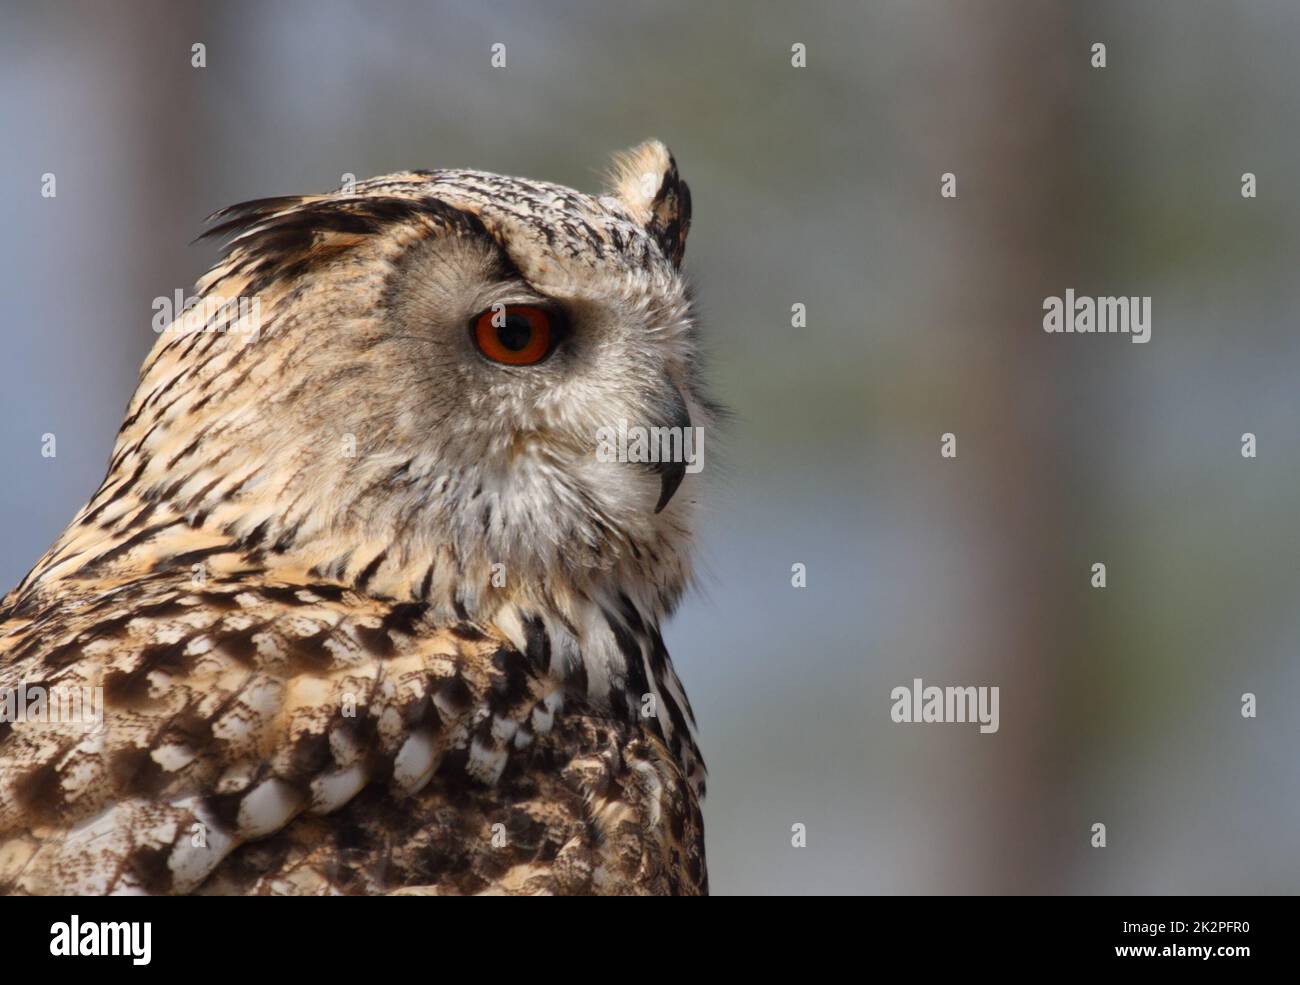 Bubo Bubo OWL retrato en la naturaleza con fondo liso Foto de stock